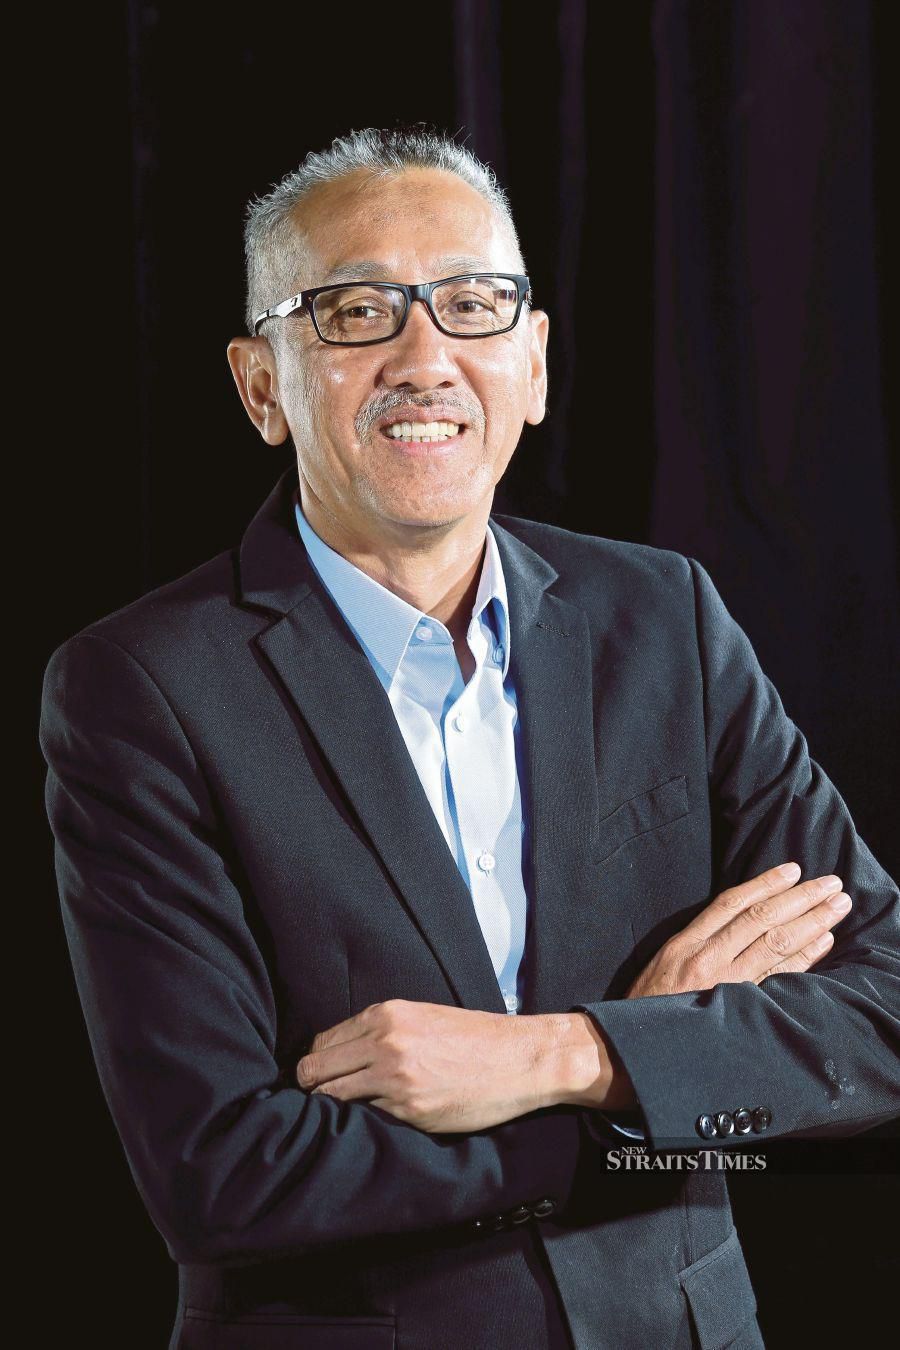 New Straits Times Press (M) Bhd group managing editor, Datuk Ahmad Zaini Kamaruzzaman